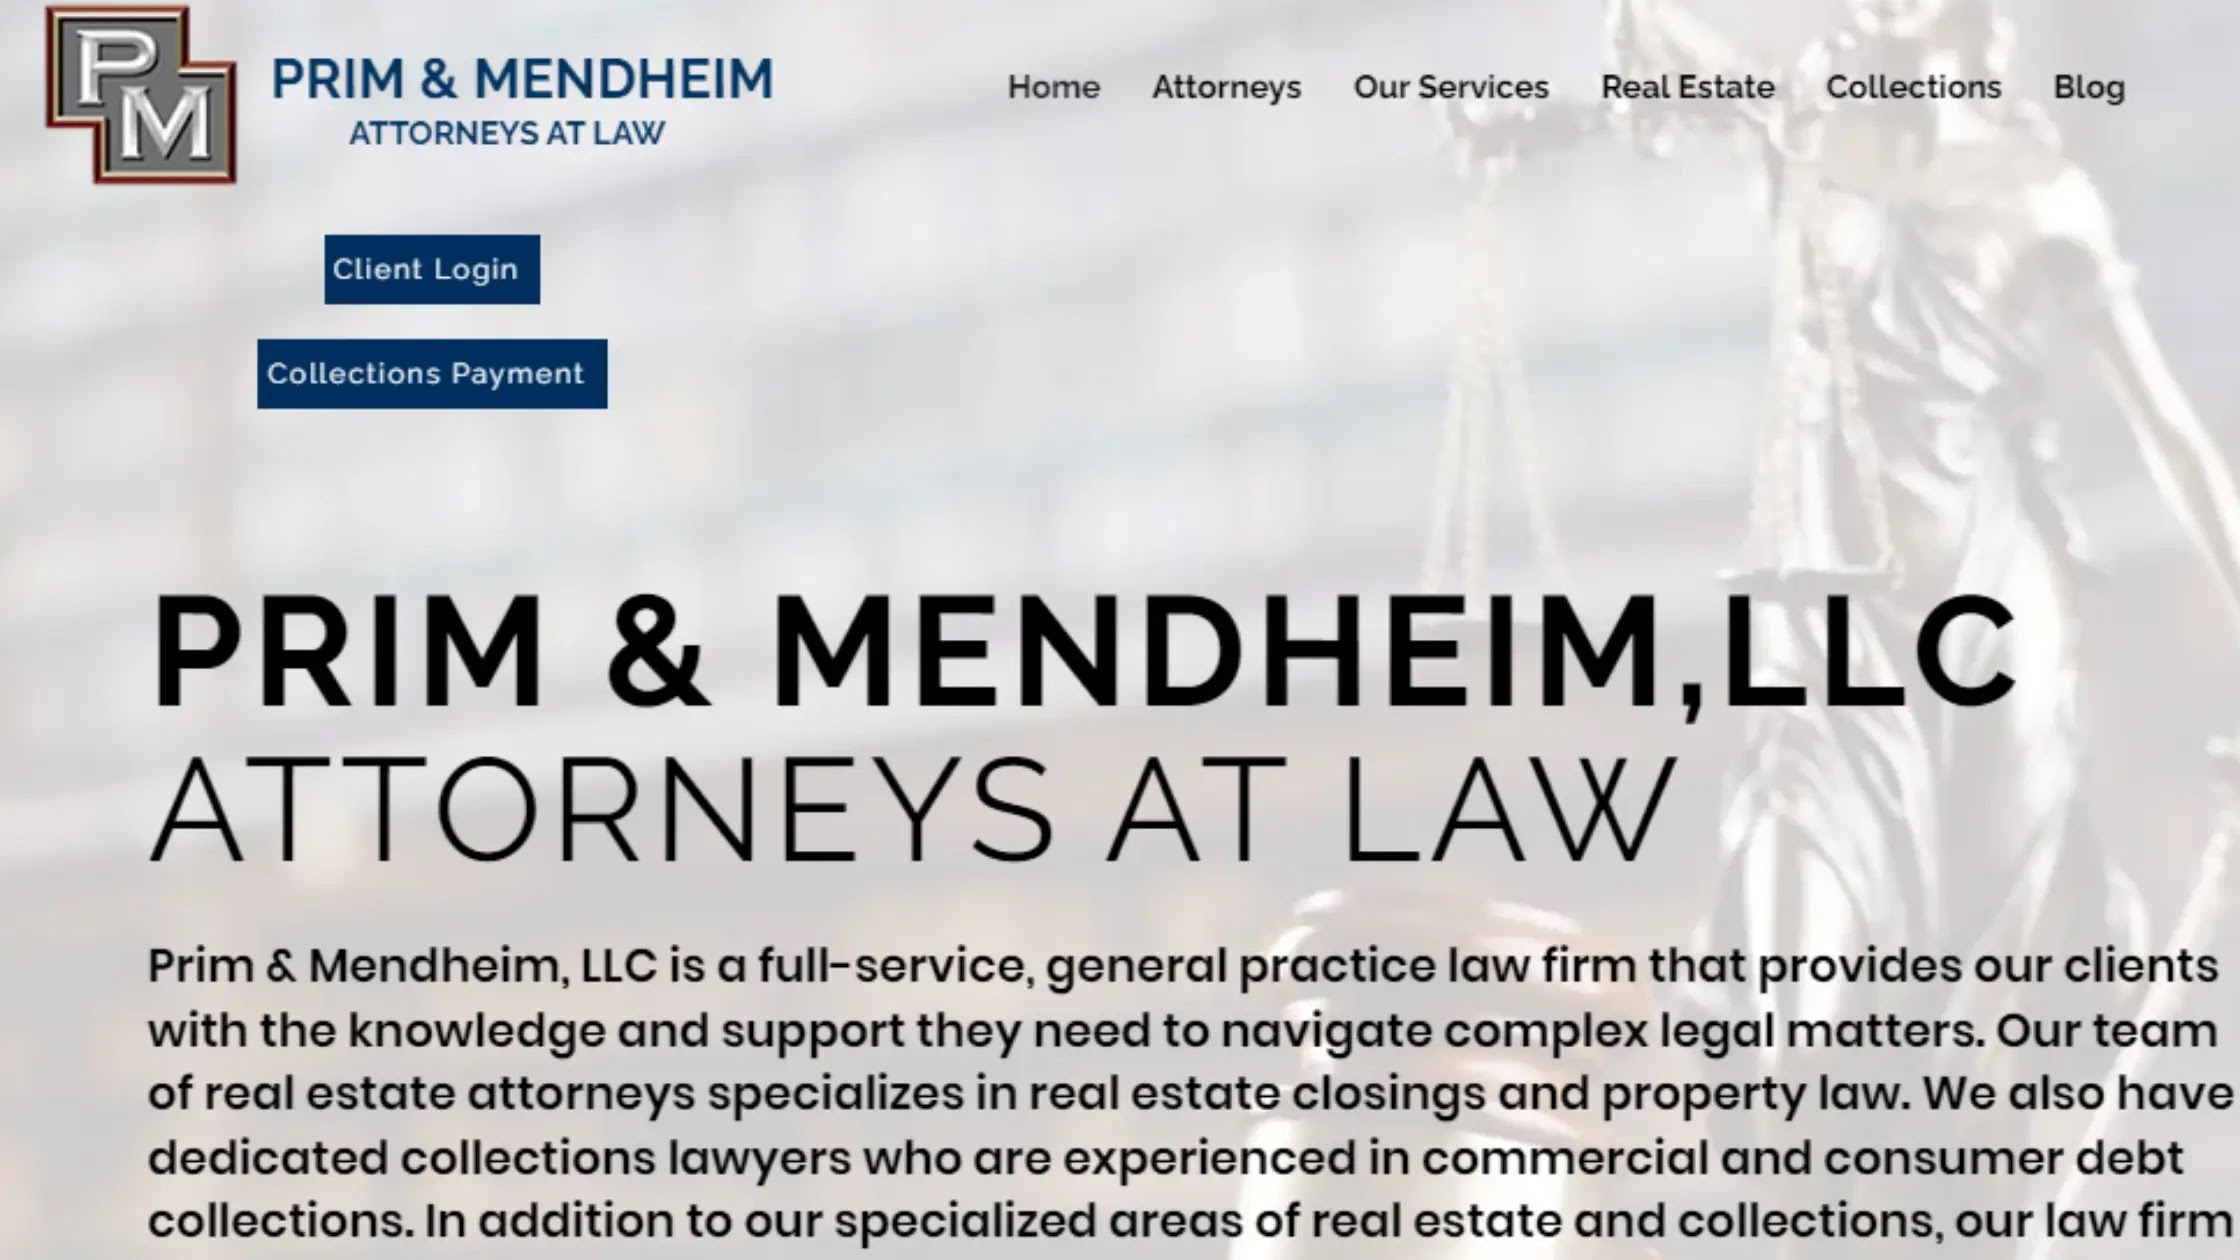 Prim & Mendheim, LLC